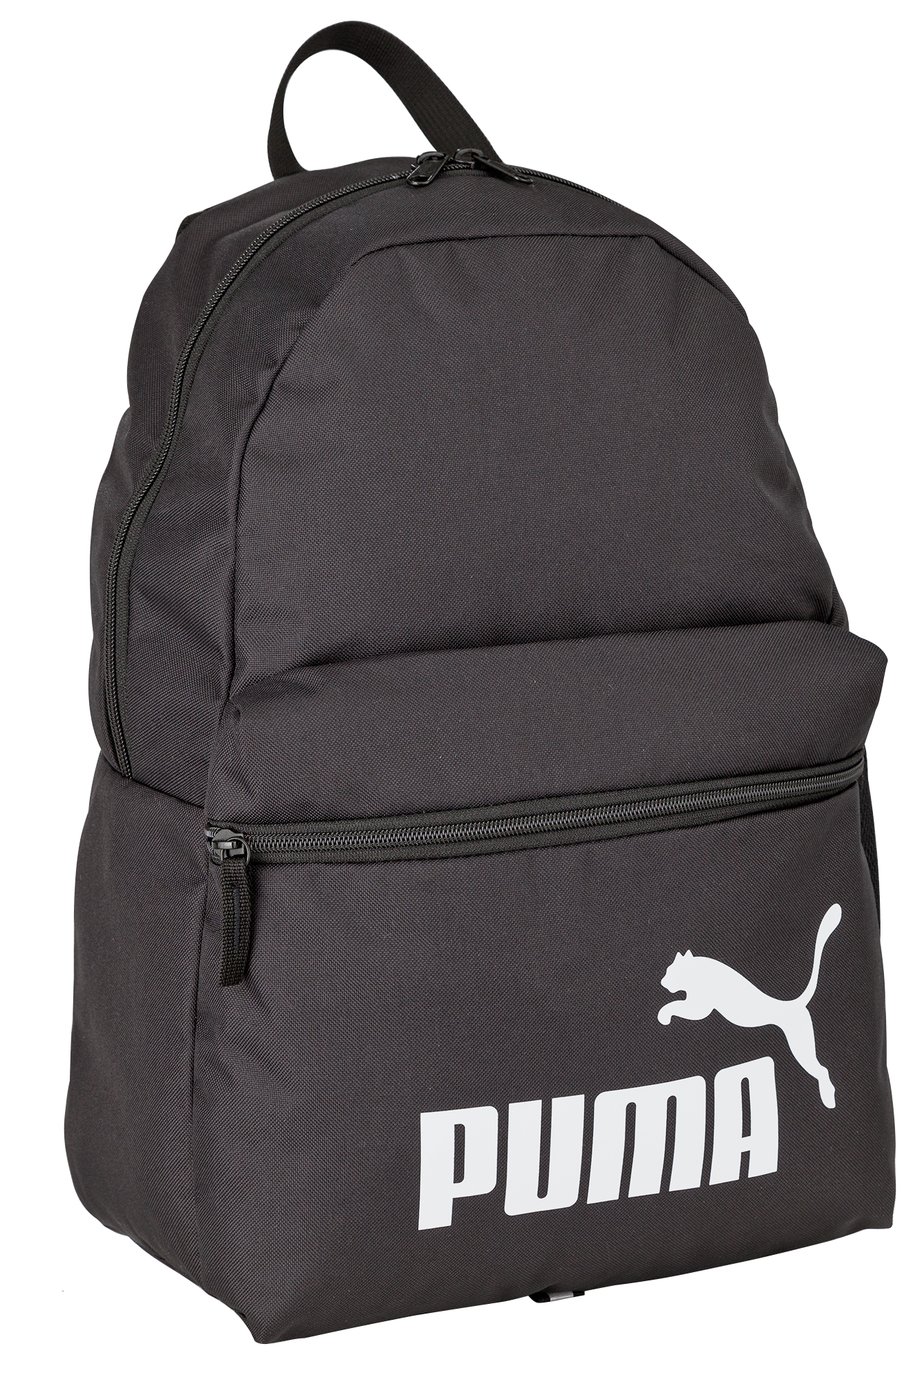 argos puma backpack